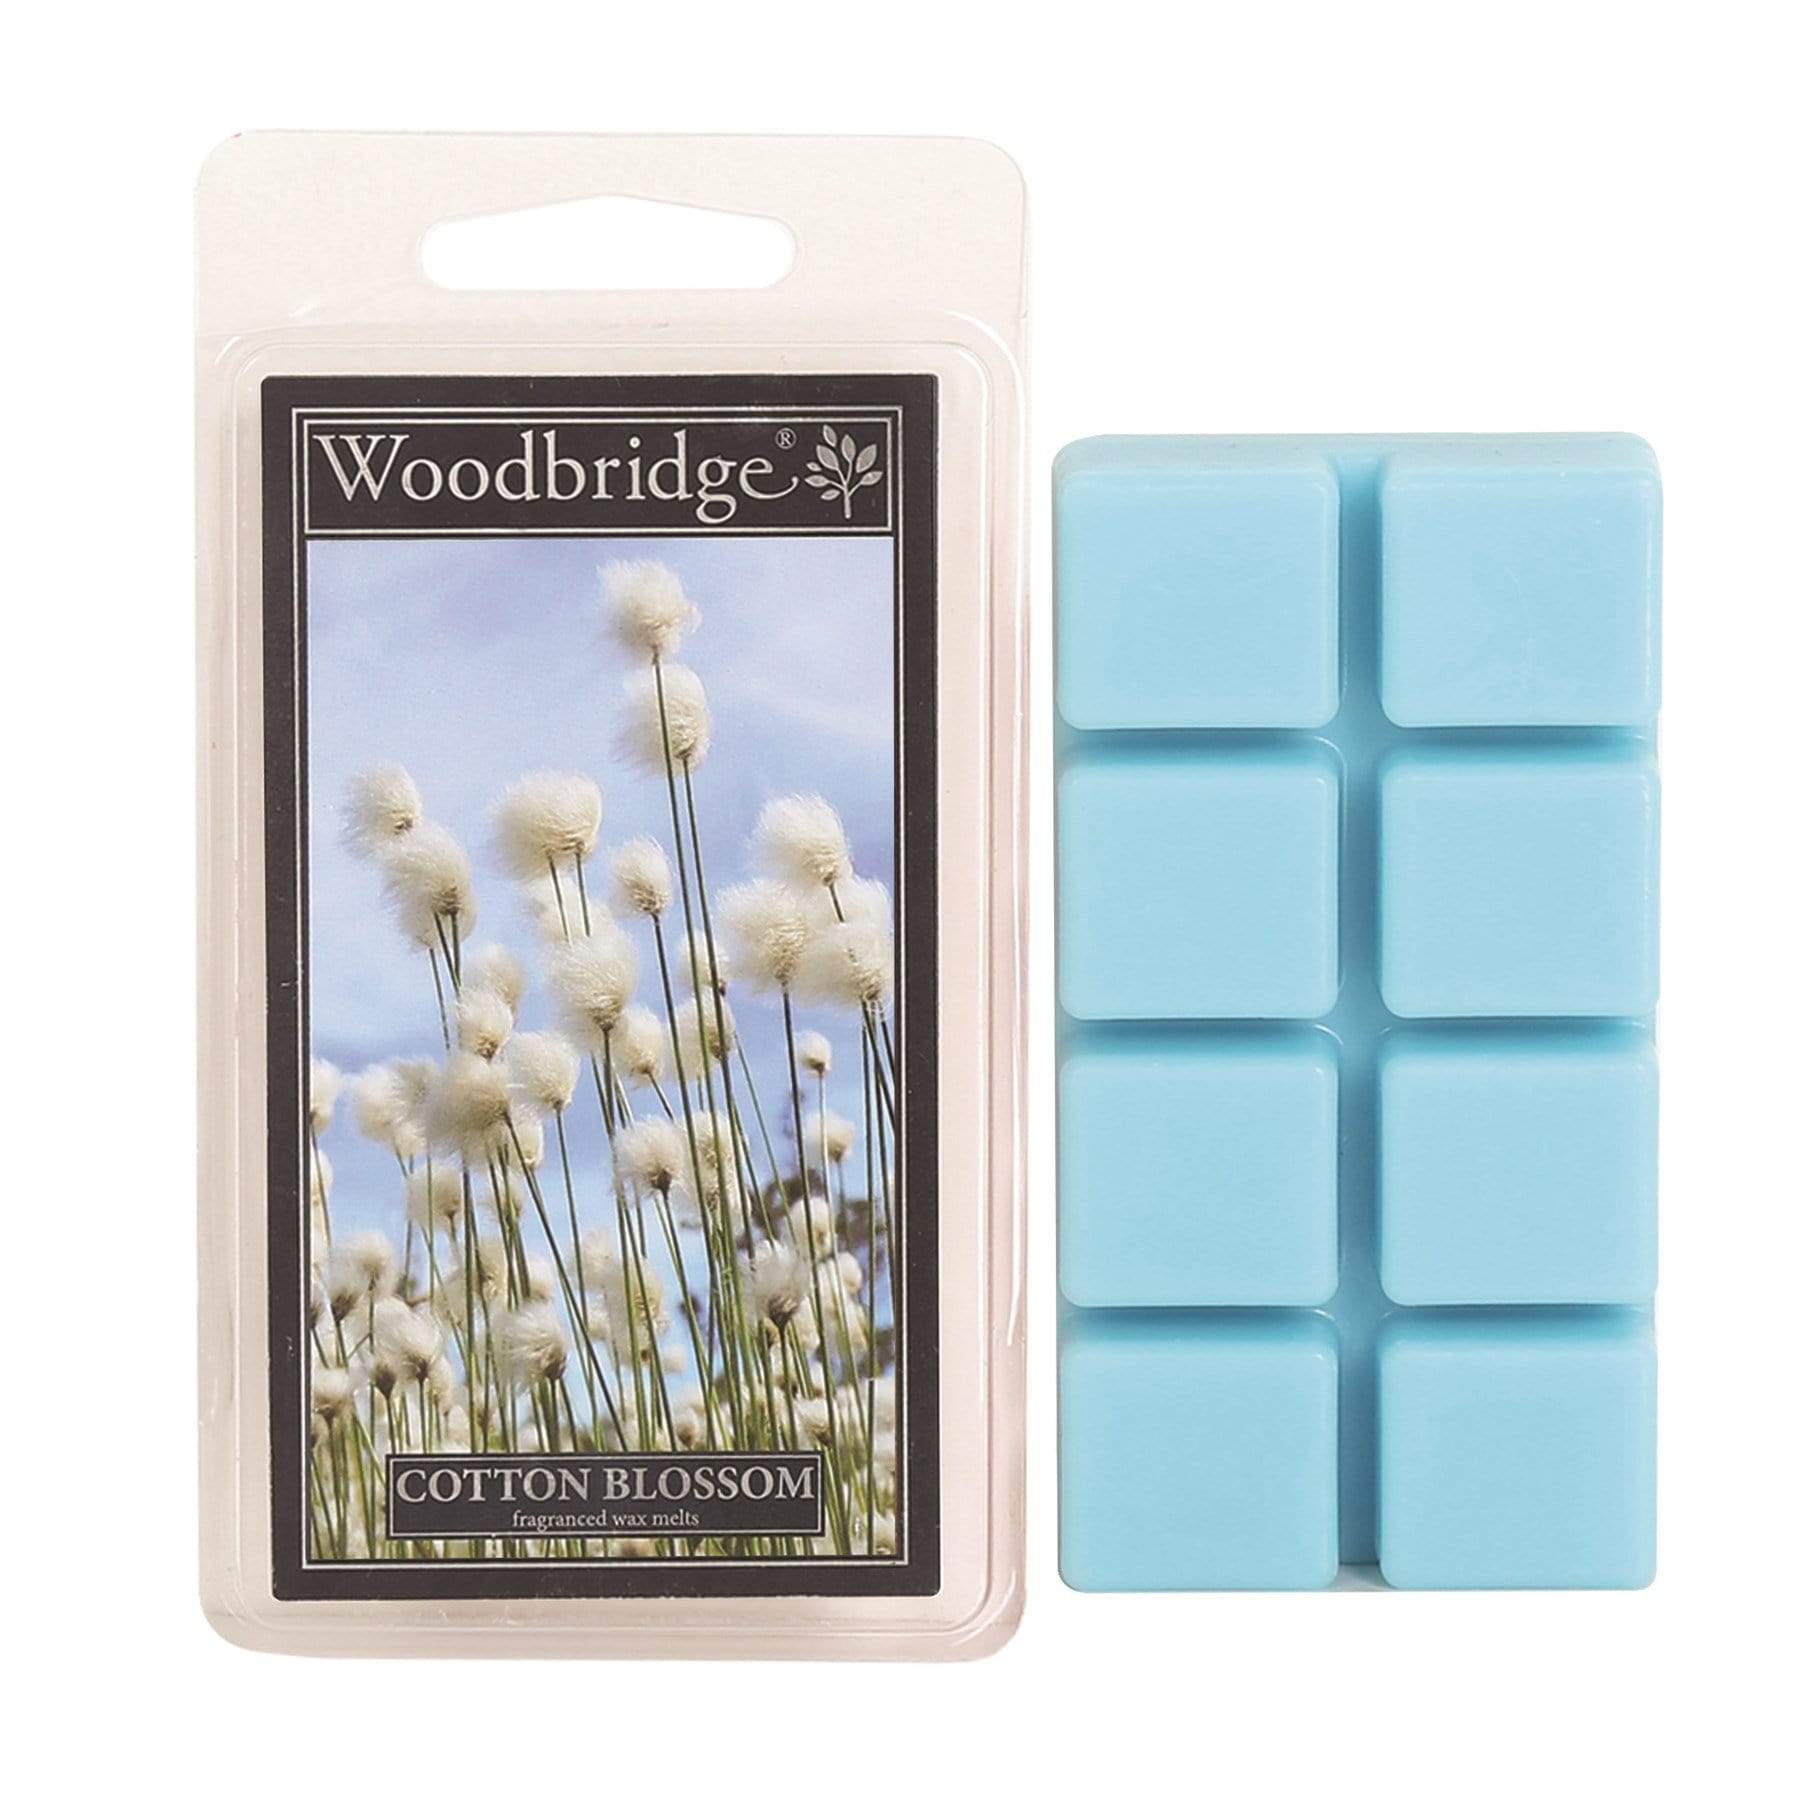 Aroma Accessories Wax Melt Woodbridge Wax Melts - Cotton Blossom